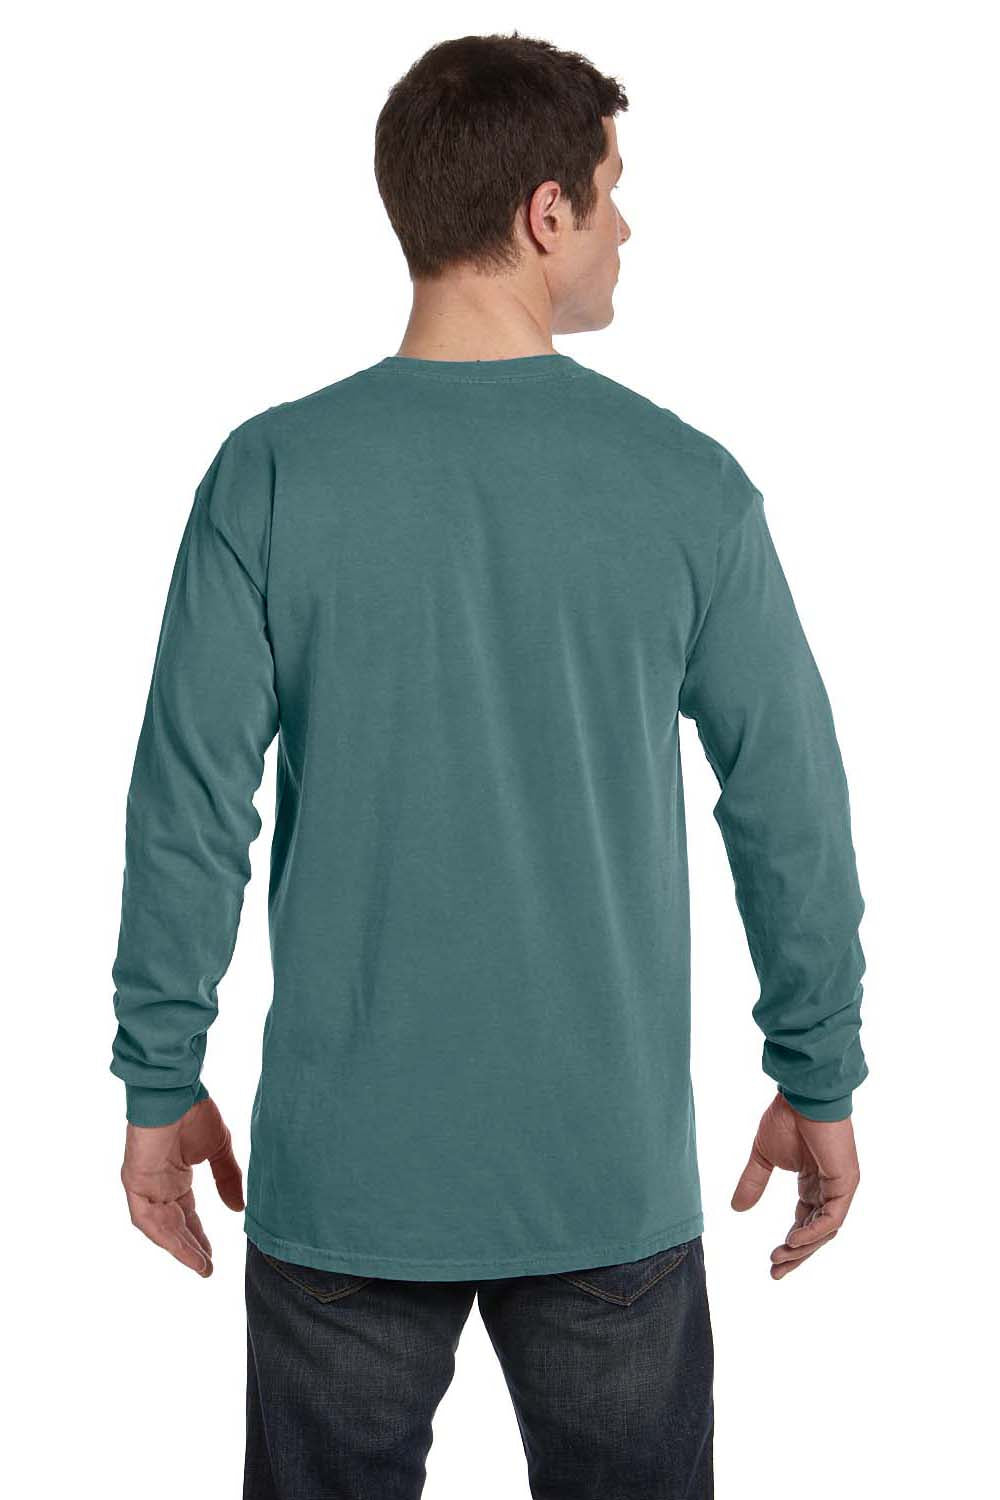 Comfort Colors C6014 Mens Long Sleeve Crewneck T-Shirt Blue Spruce Back